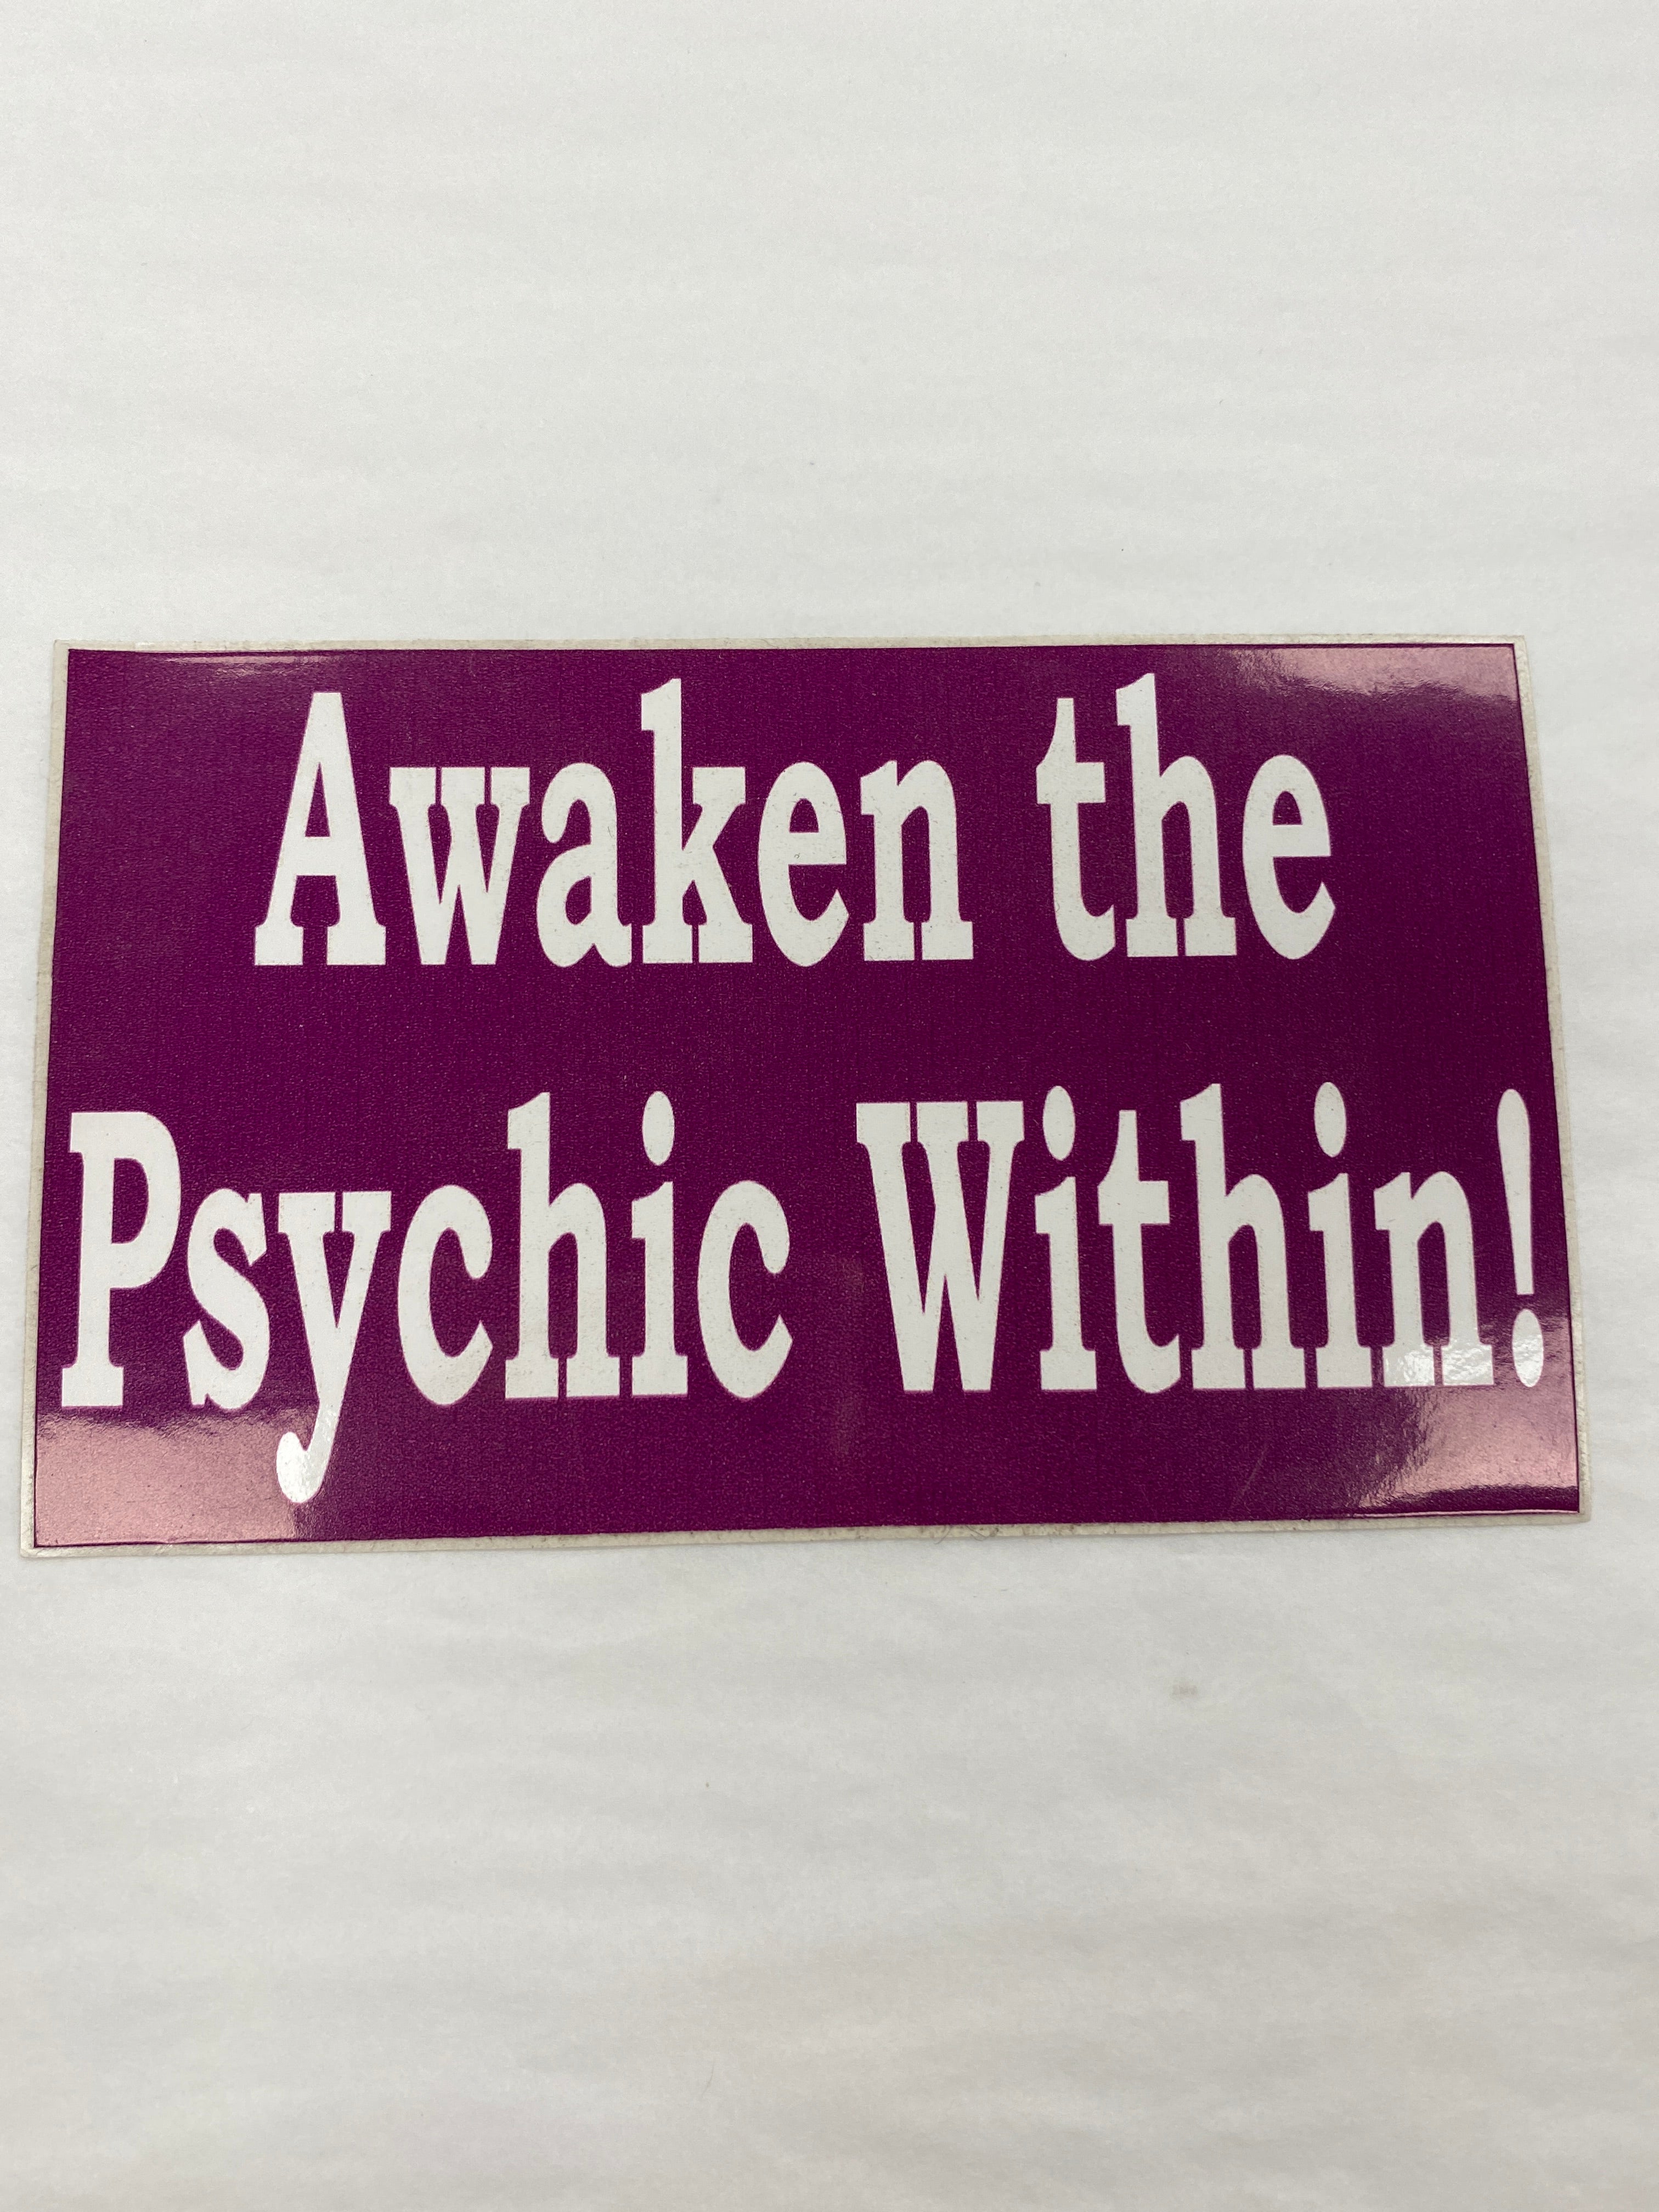 Awaken the Psychic Within! Stickers